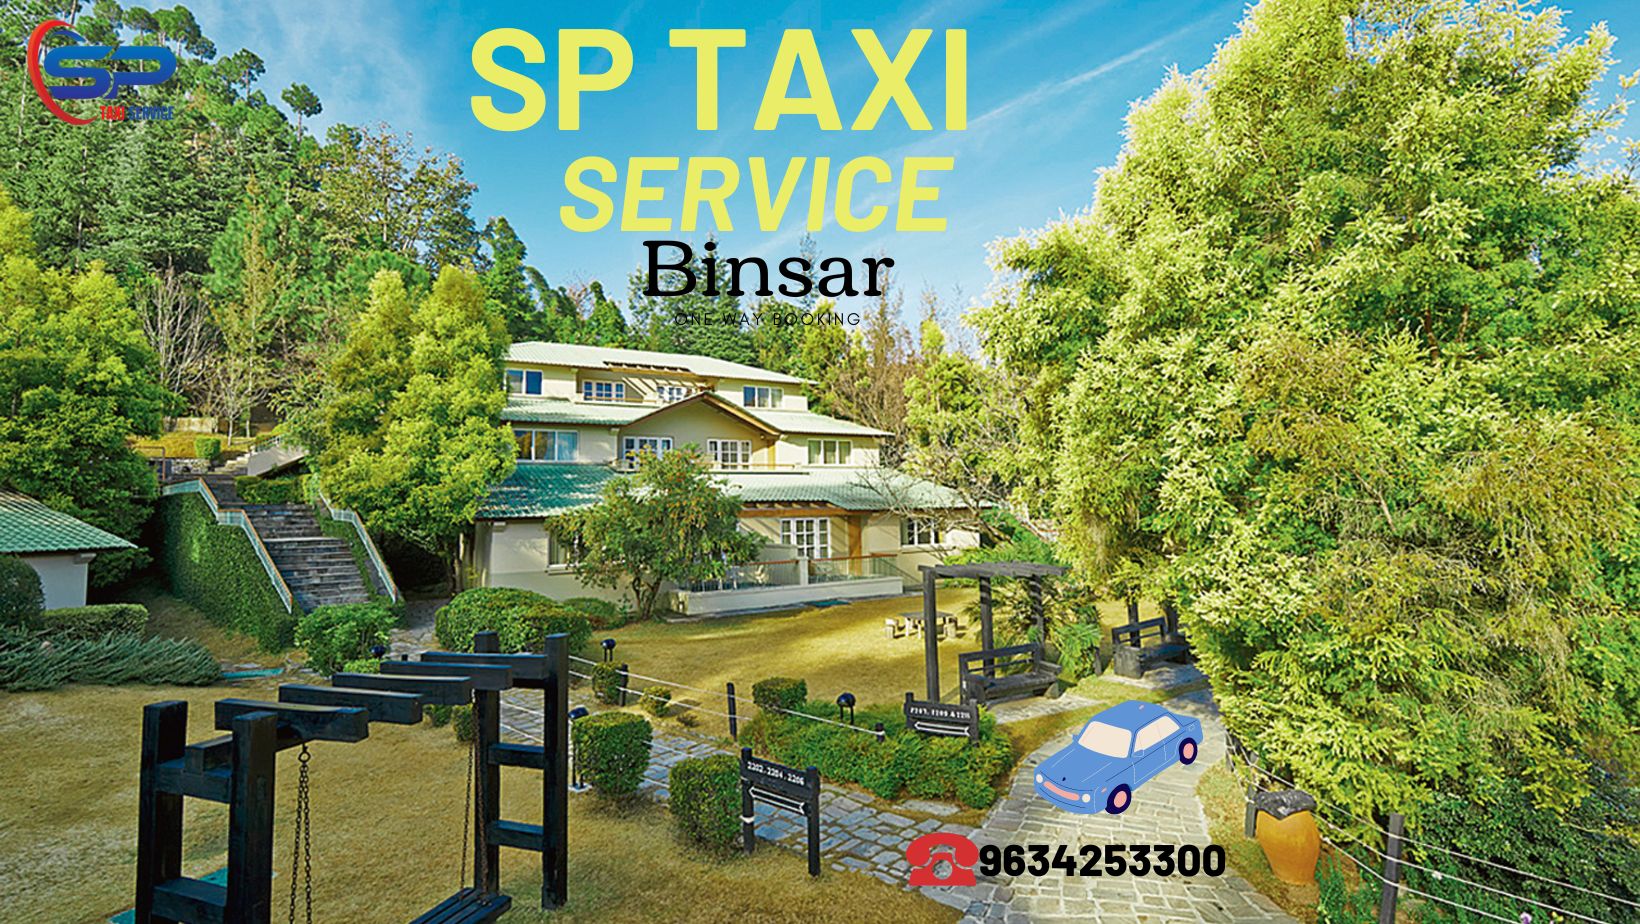 Binsar Taxi service